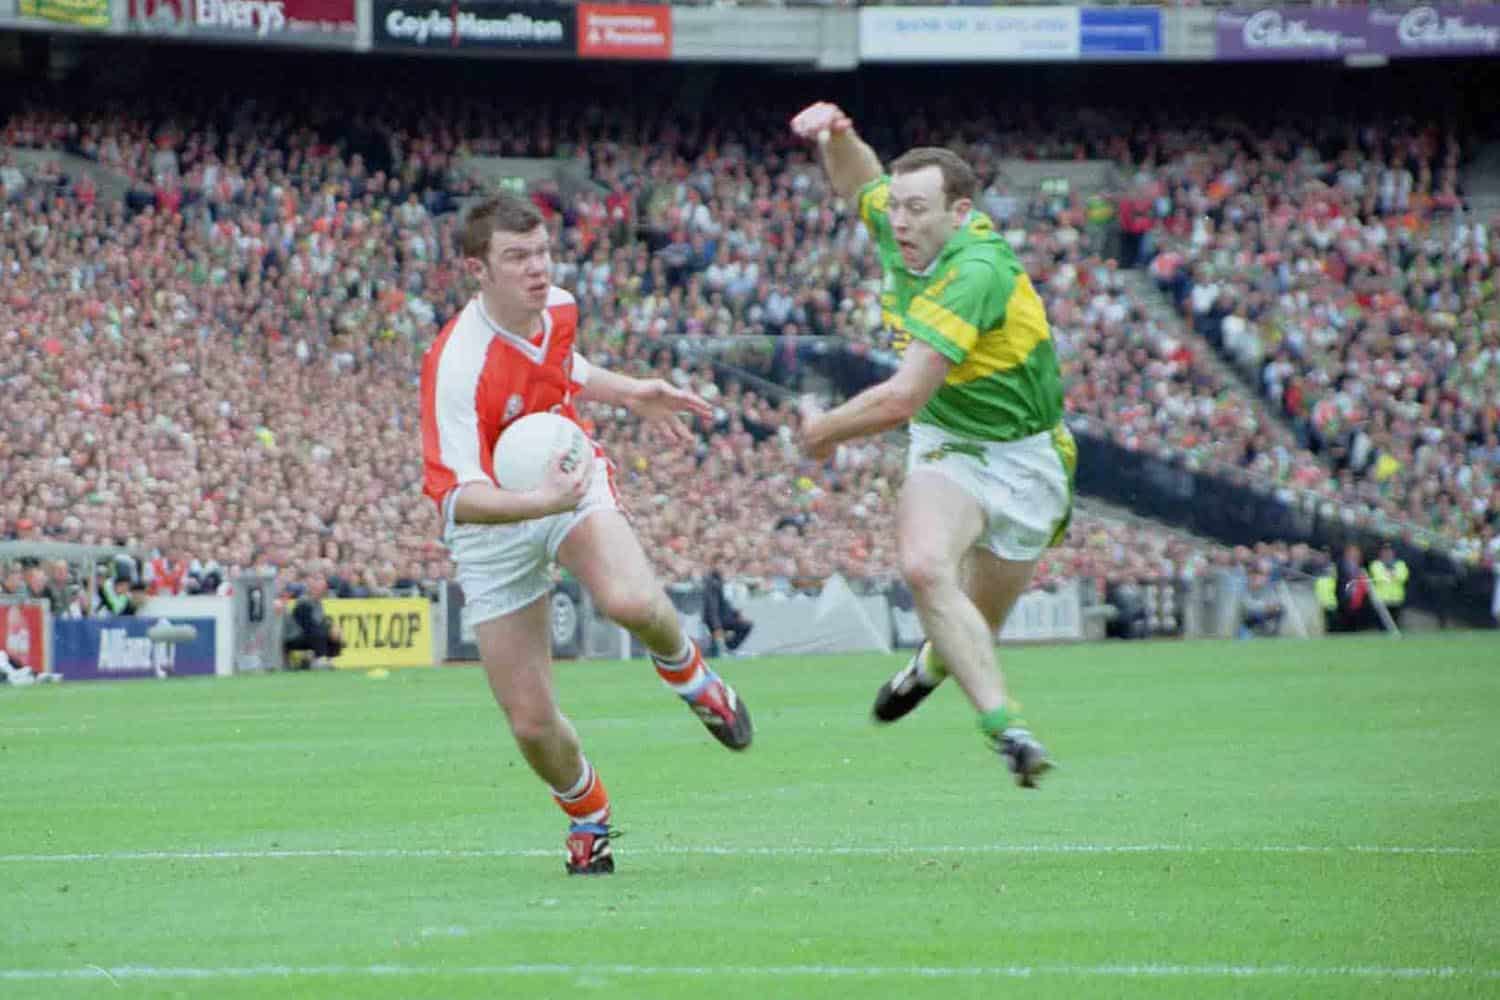 Ronan Clarke in action against Kerry's Seamus Moynihan in 2002's All-Ireland Final